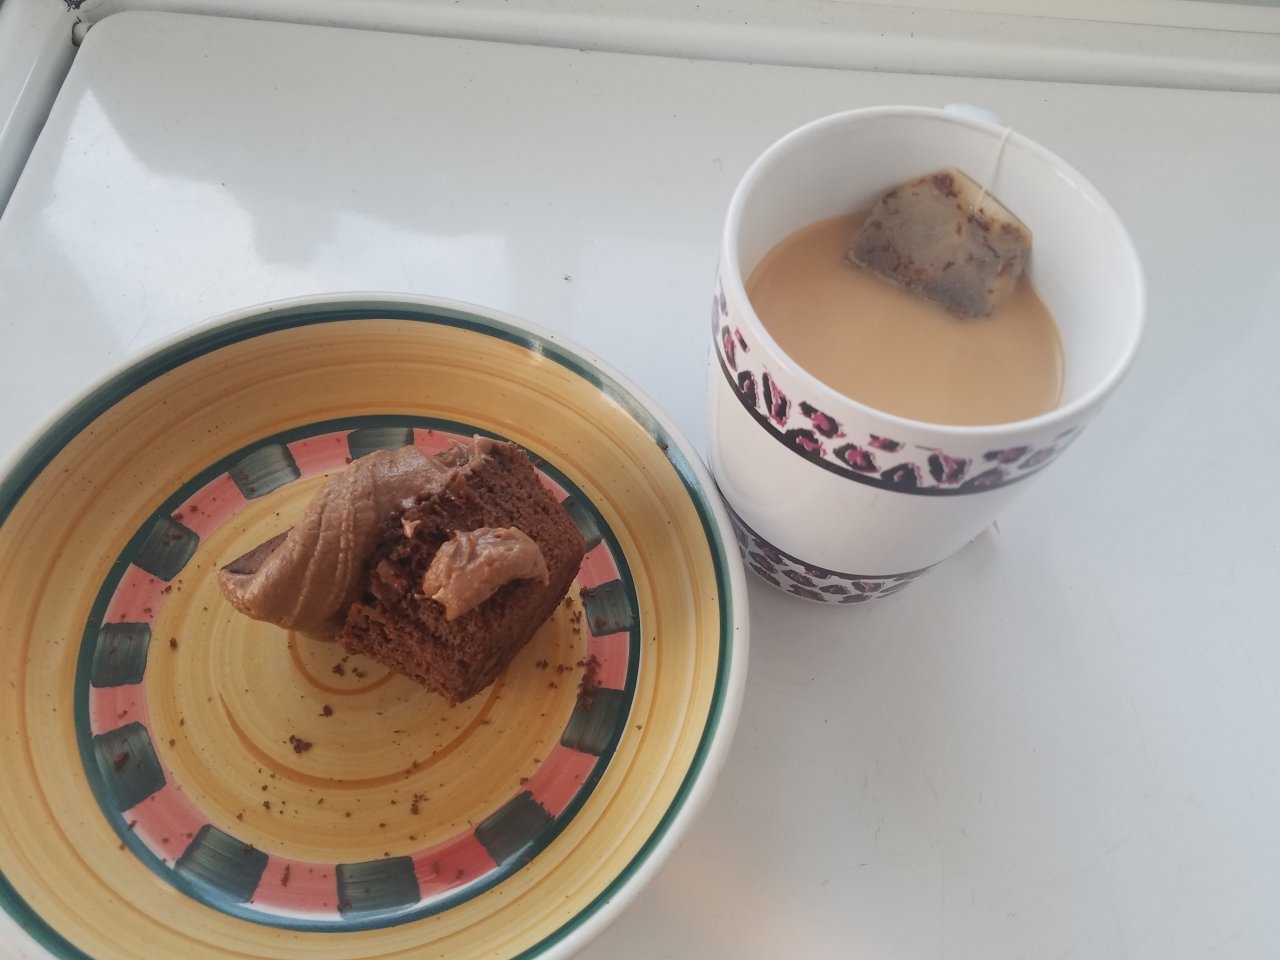 Canna cupcake and tea